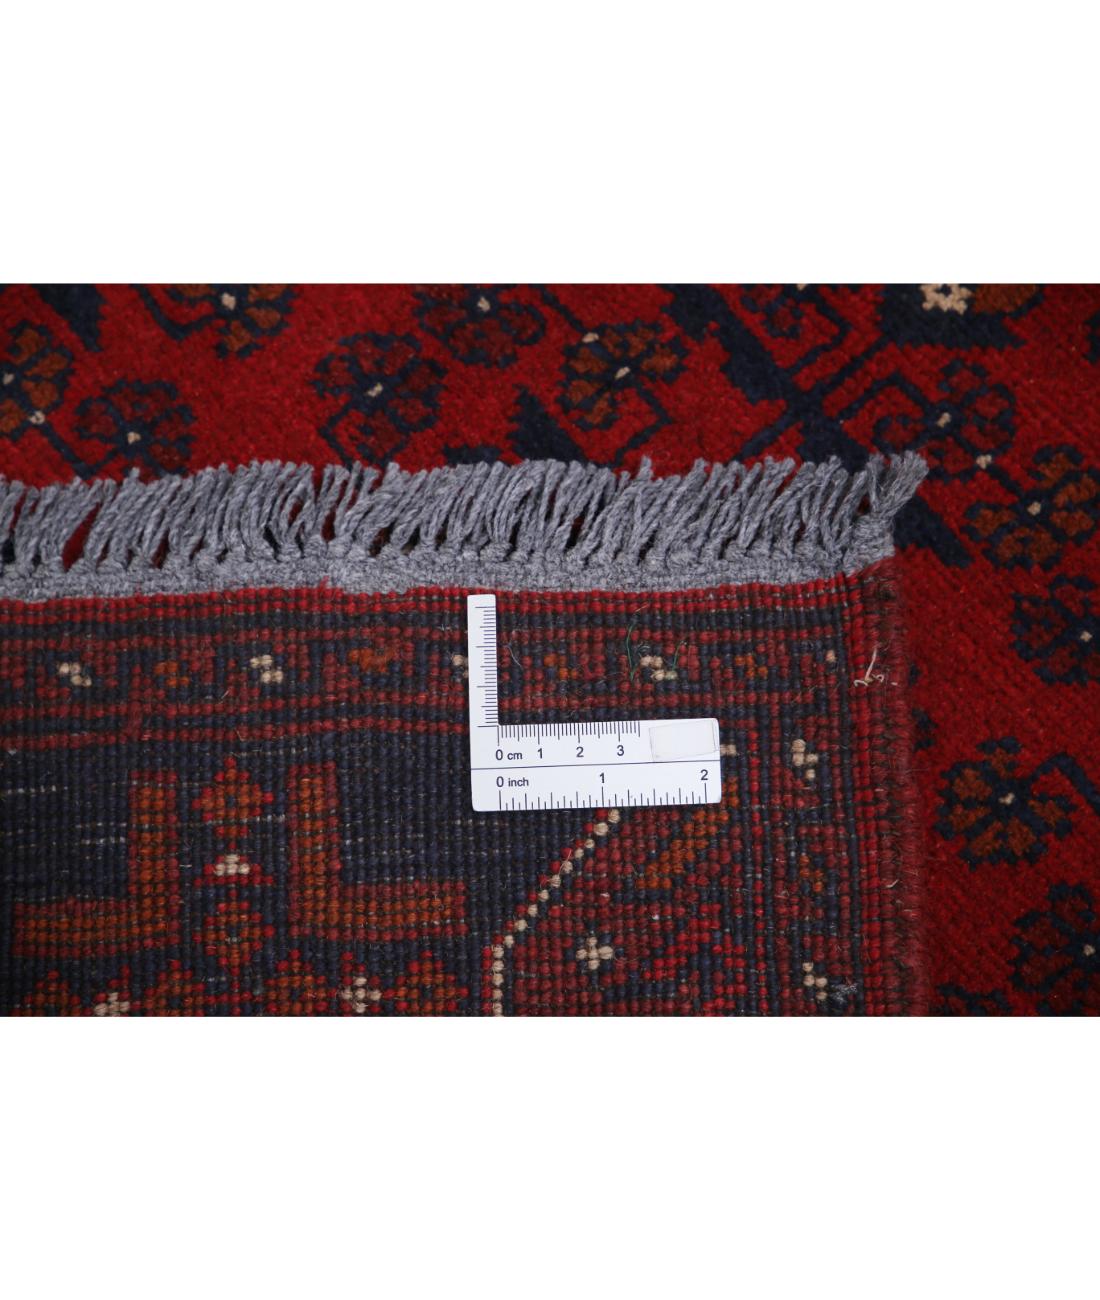 Hand Knotted Afghan Khamyab Wool Rug - 2'8'' x 9'3'' 2' 8" X 9' 3" (81 X 282) / Red / Blue